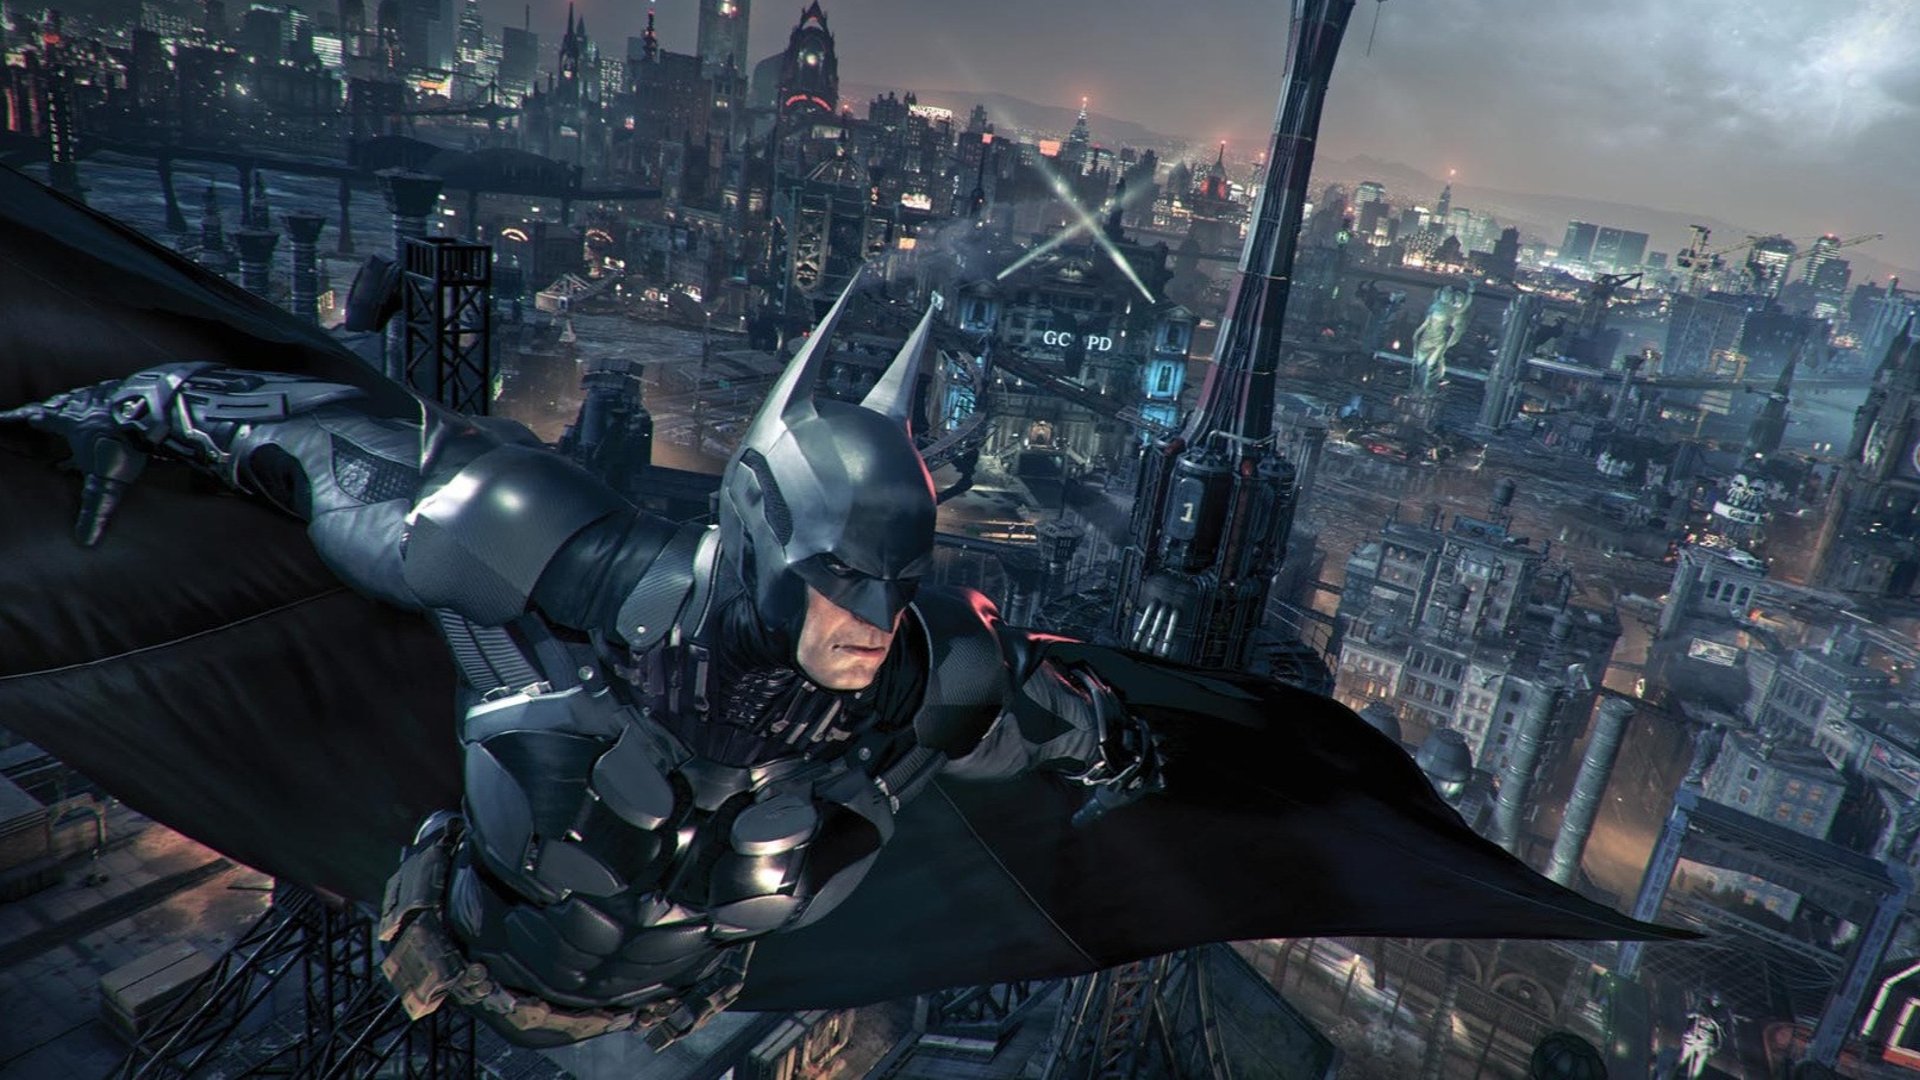 Batman can be seen swinging around the city